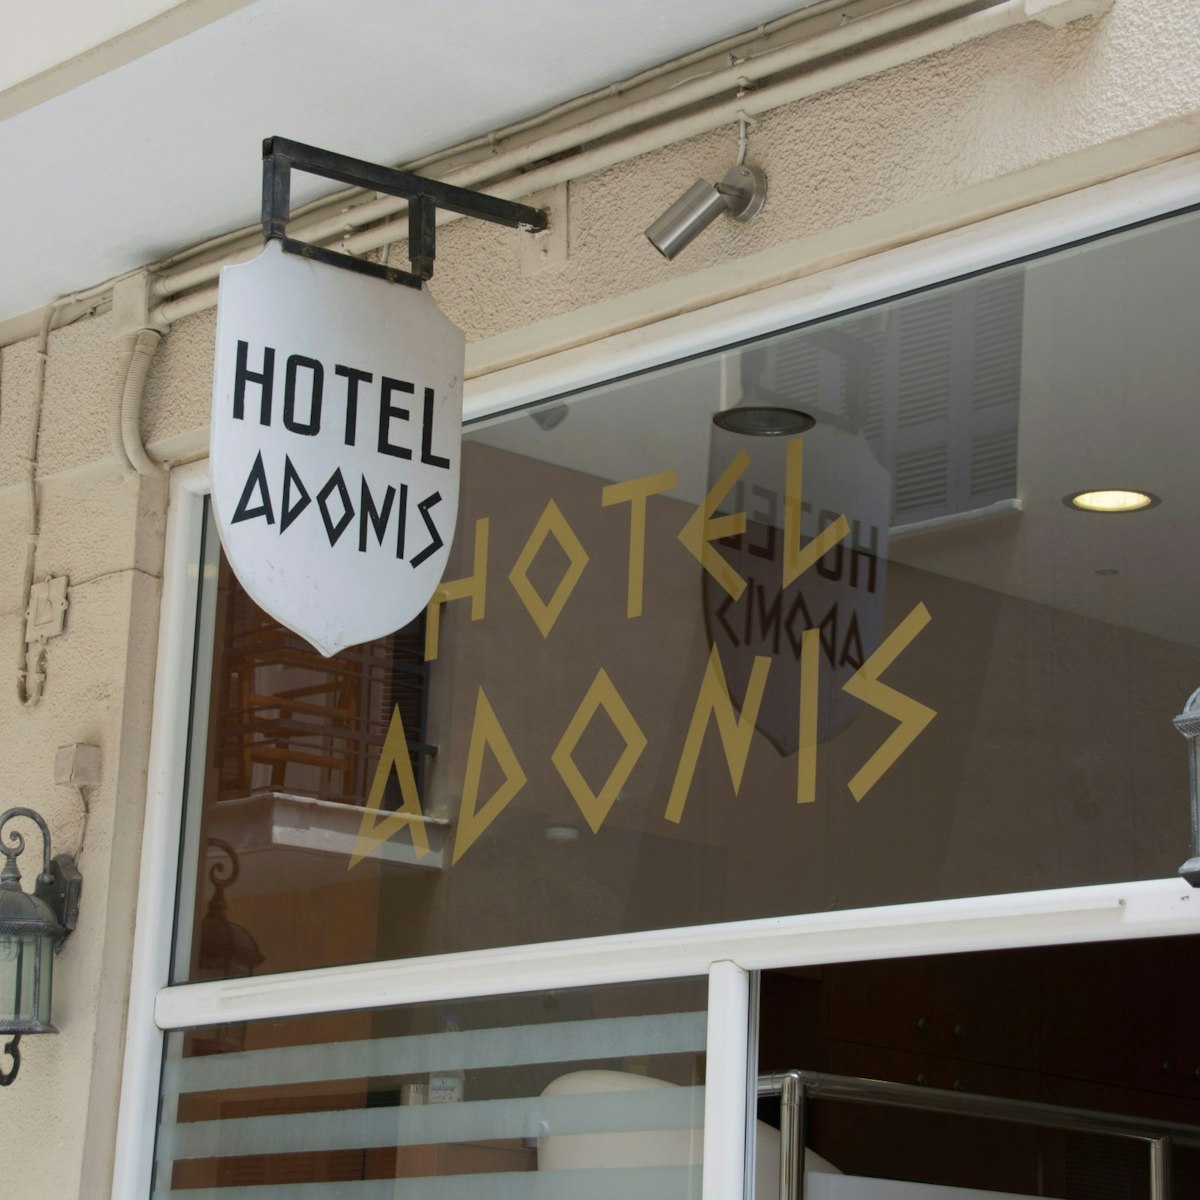 The facade of Adonis hotel in Plaka neighbourhood